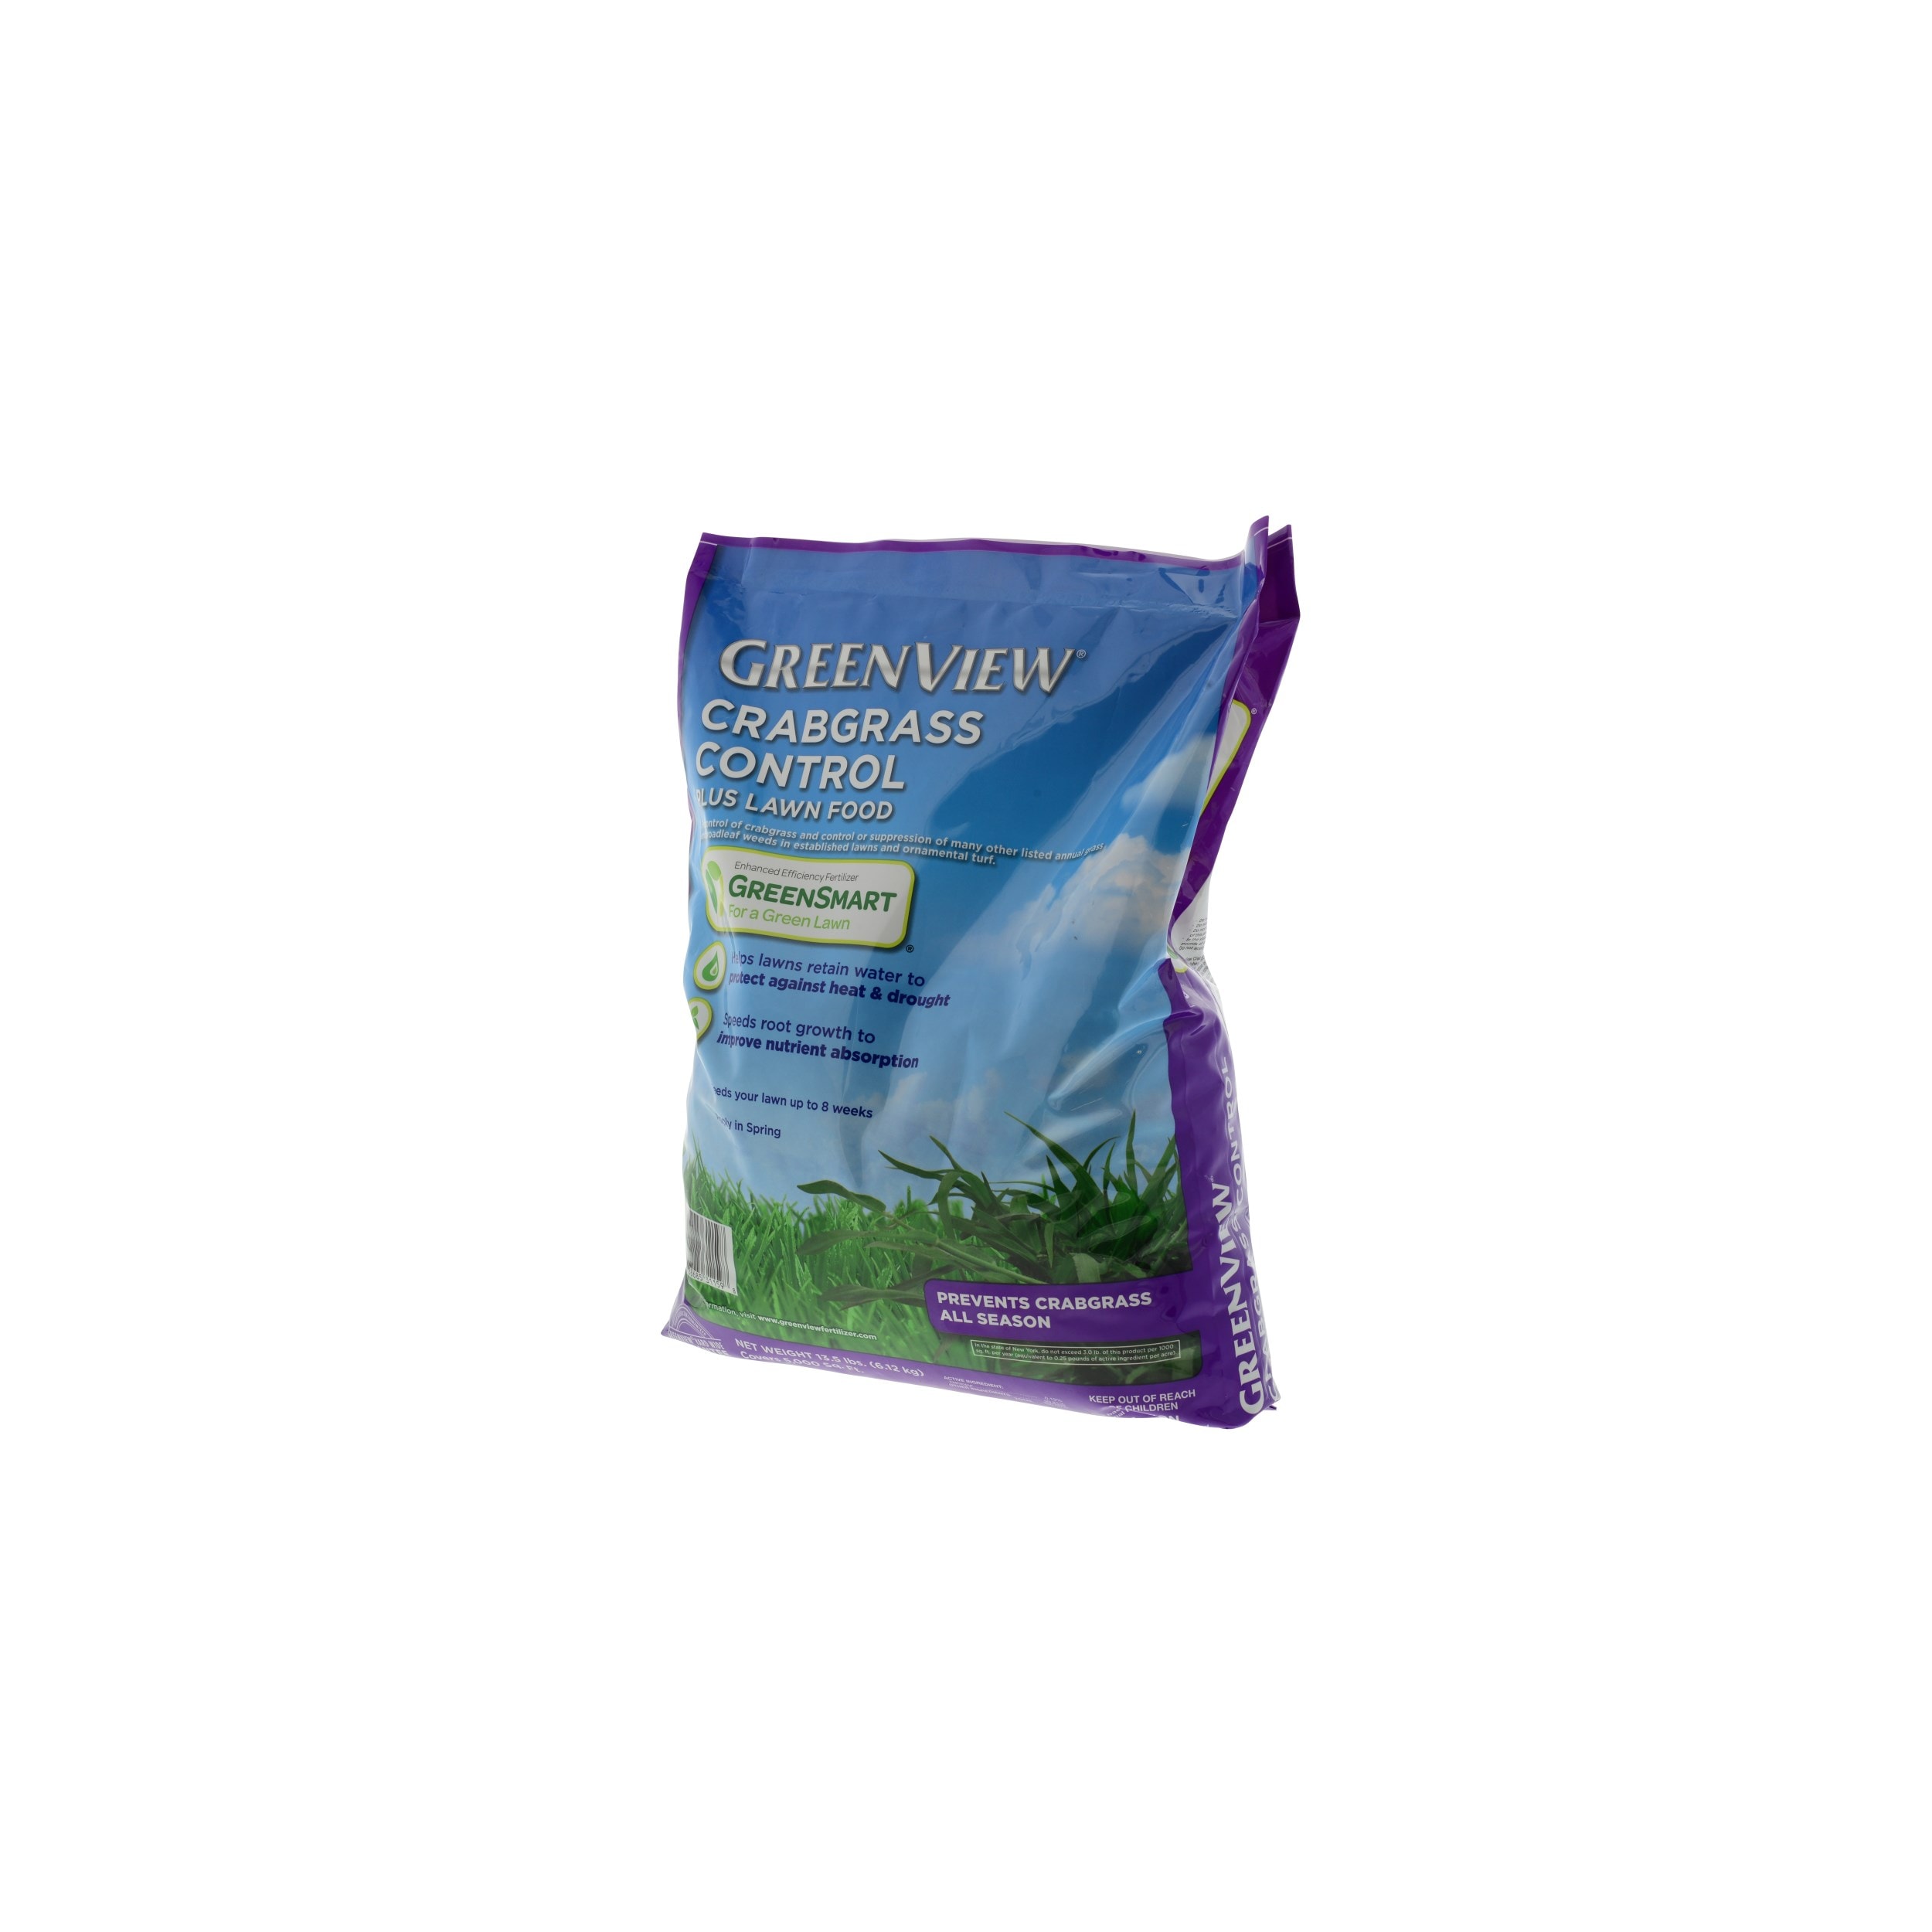 Greenview Crabgrass Control + Lawn Food 40.5-lbs. 15000-sq ft Pre